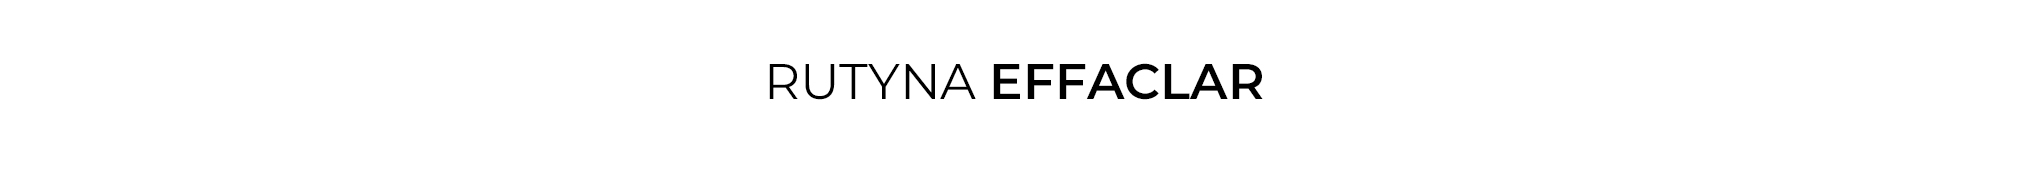 Effaclar